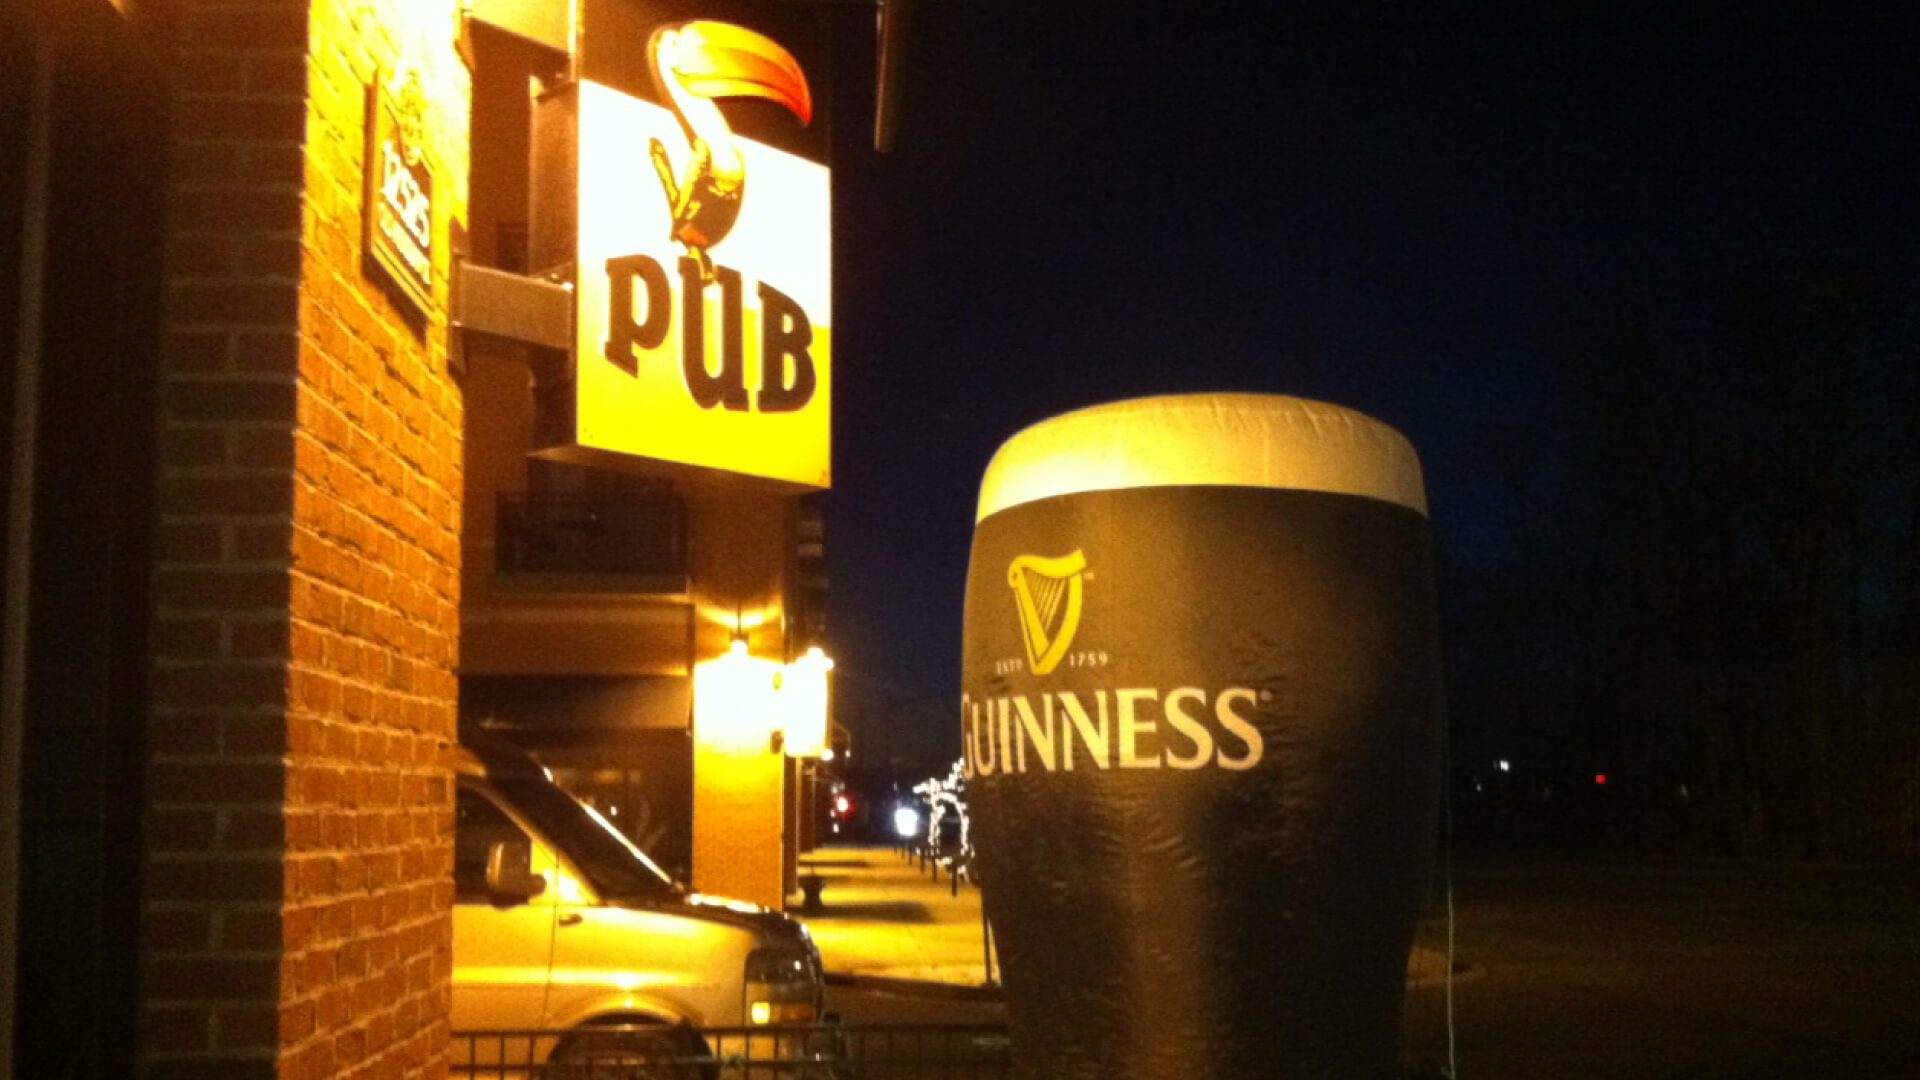 Brockway Irish Pub celebrating saint patricks day